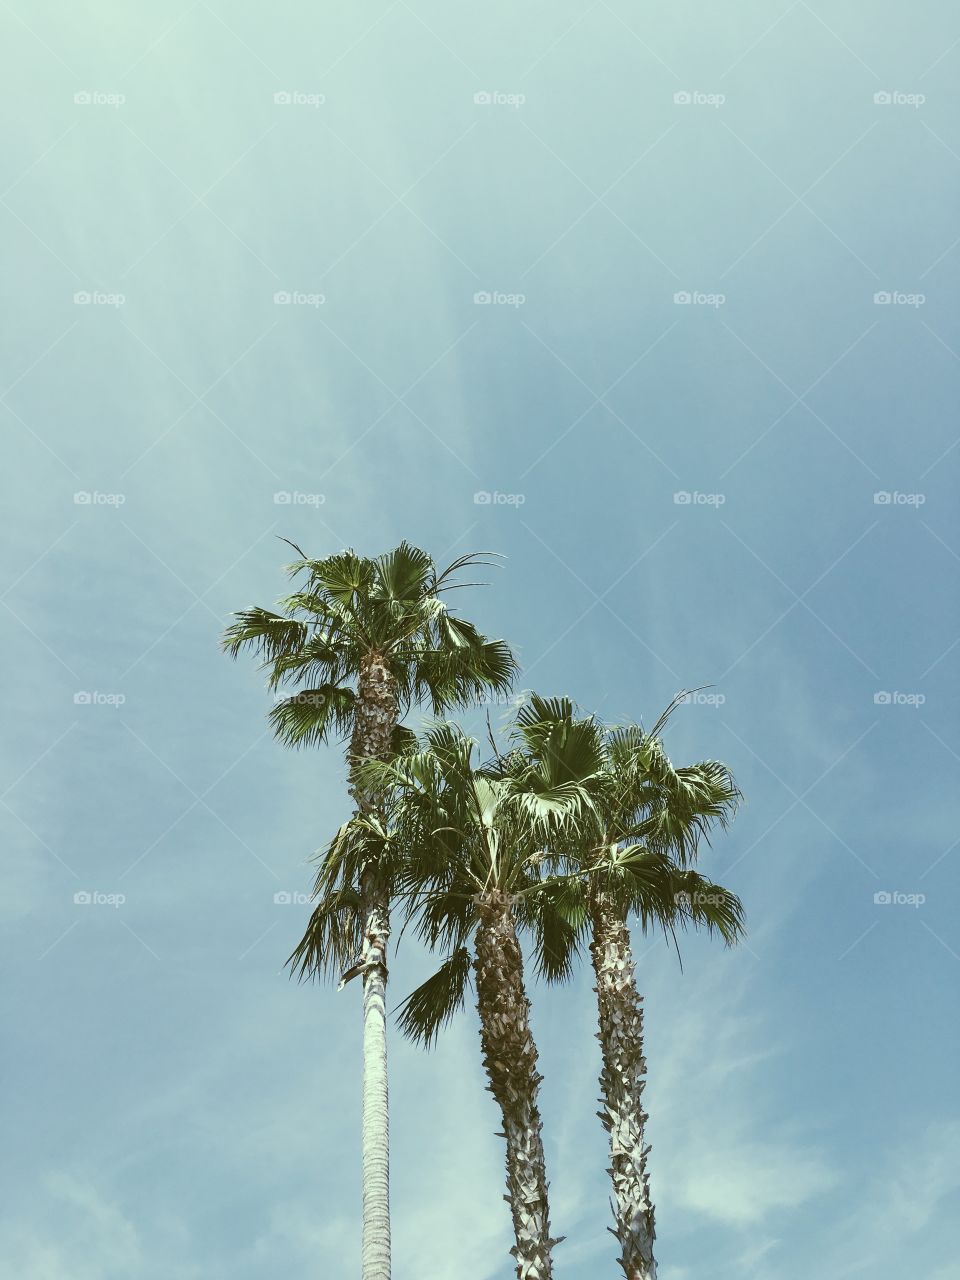 Palm trees on a blue green sky.